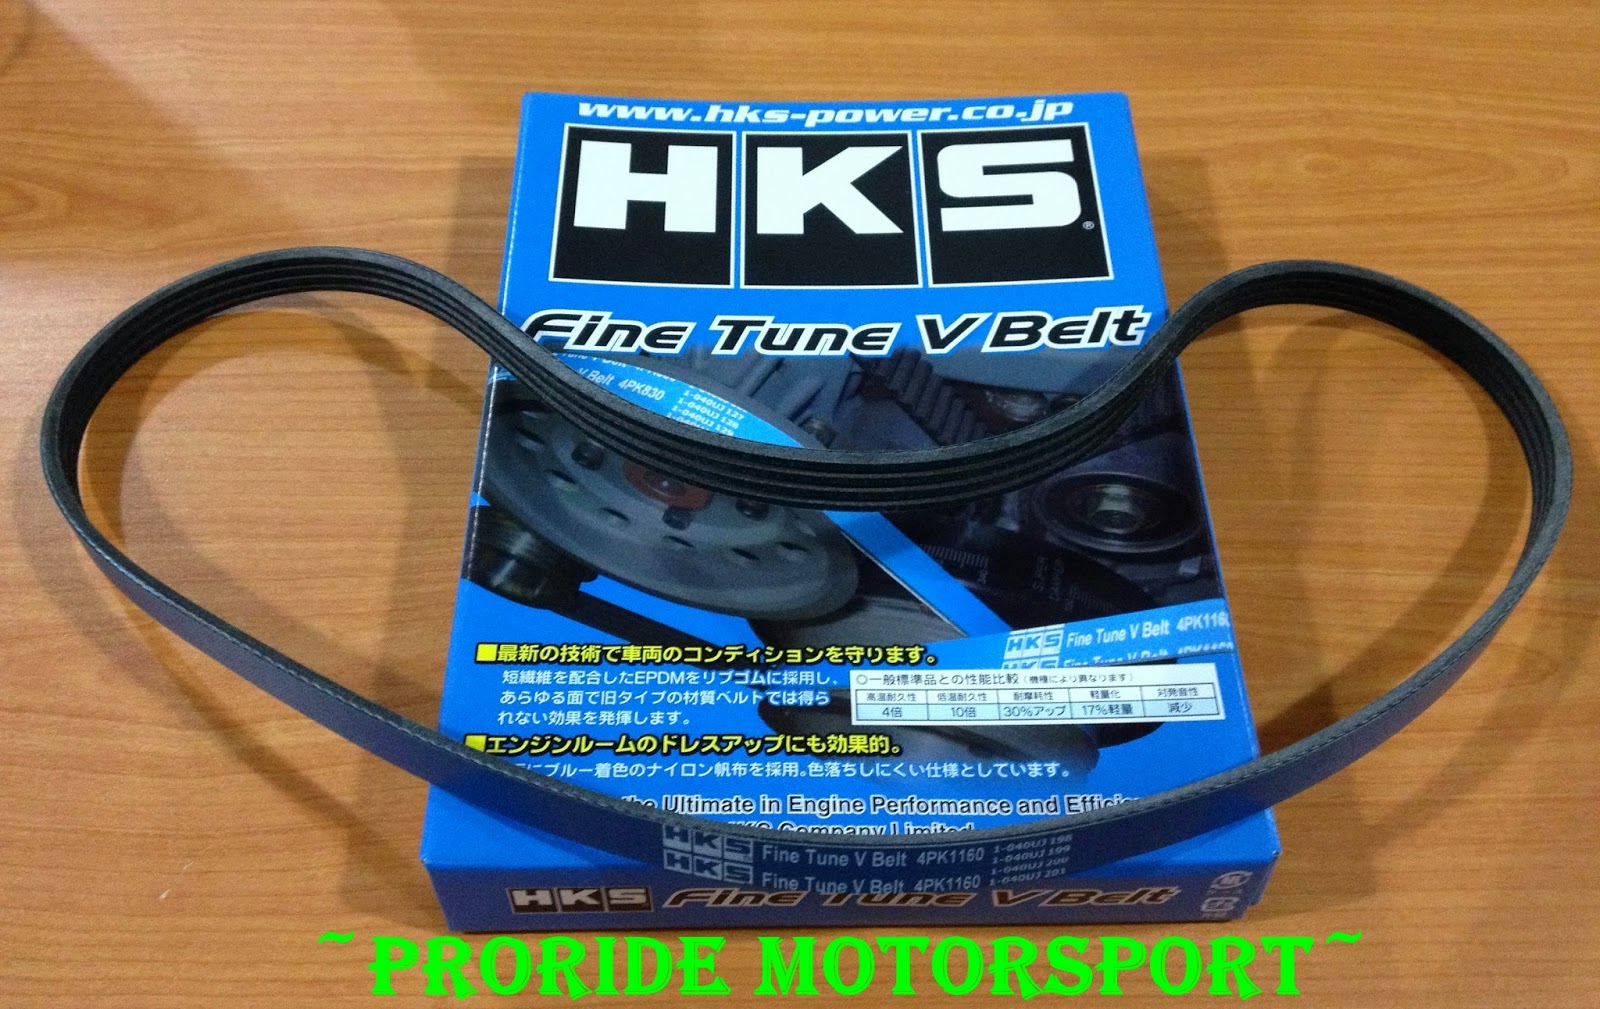 Pro-ride Motorsports: HKS Fine Tune V Belt for Honda CR-Z